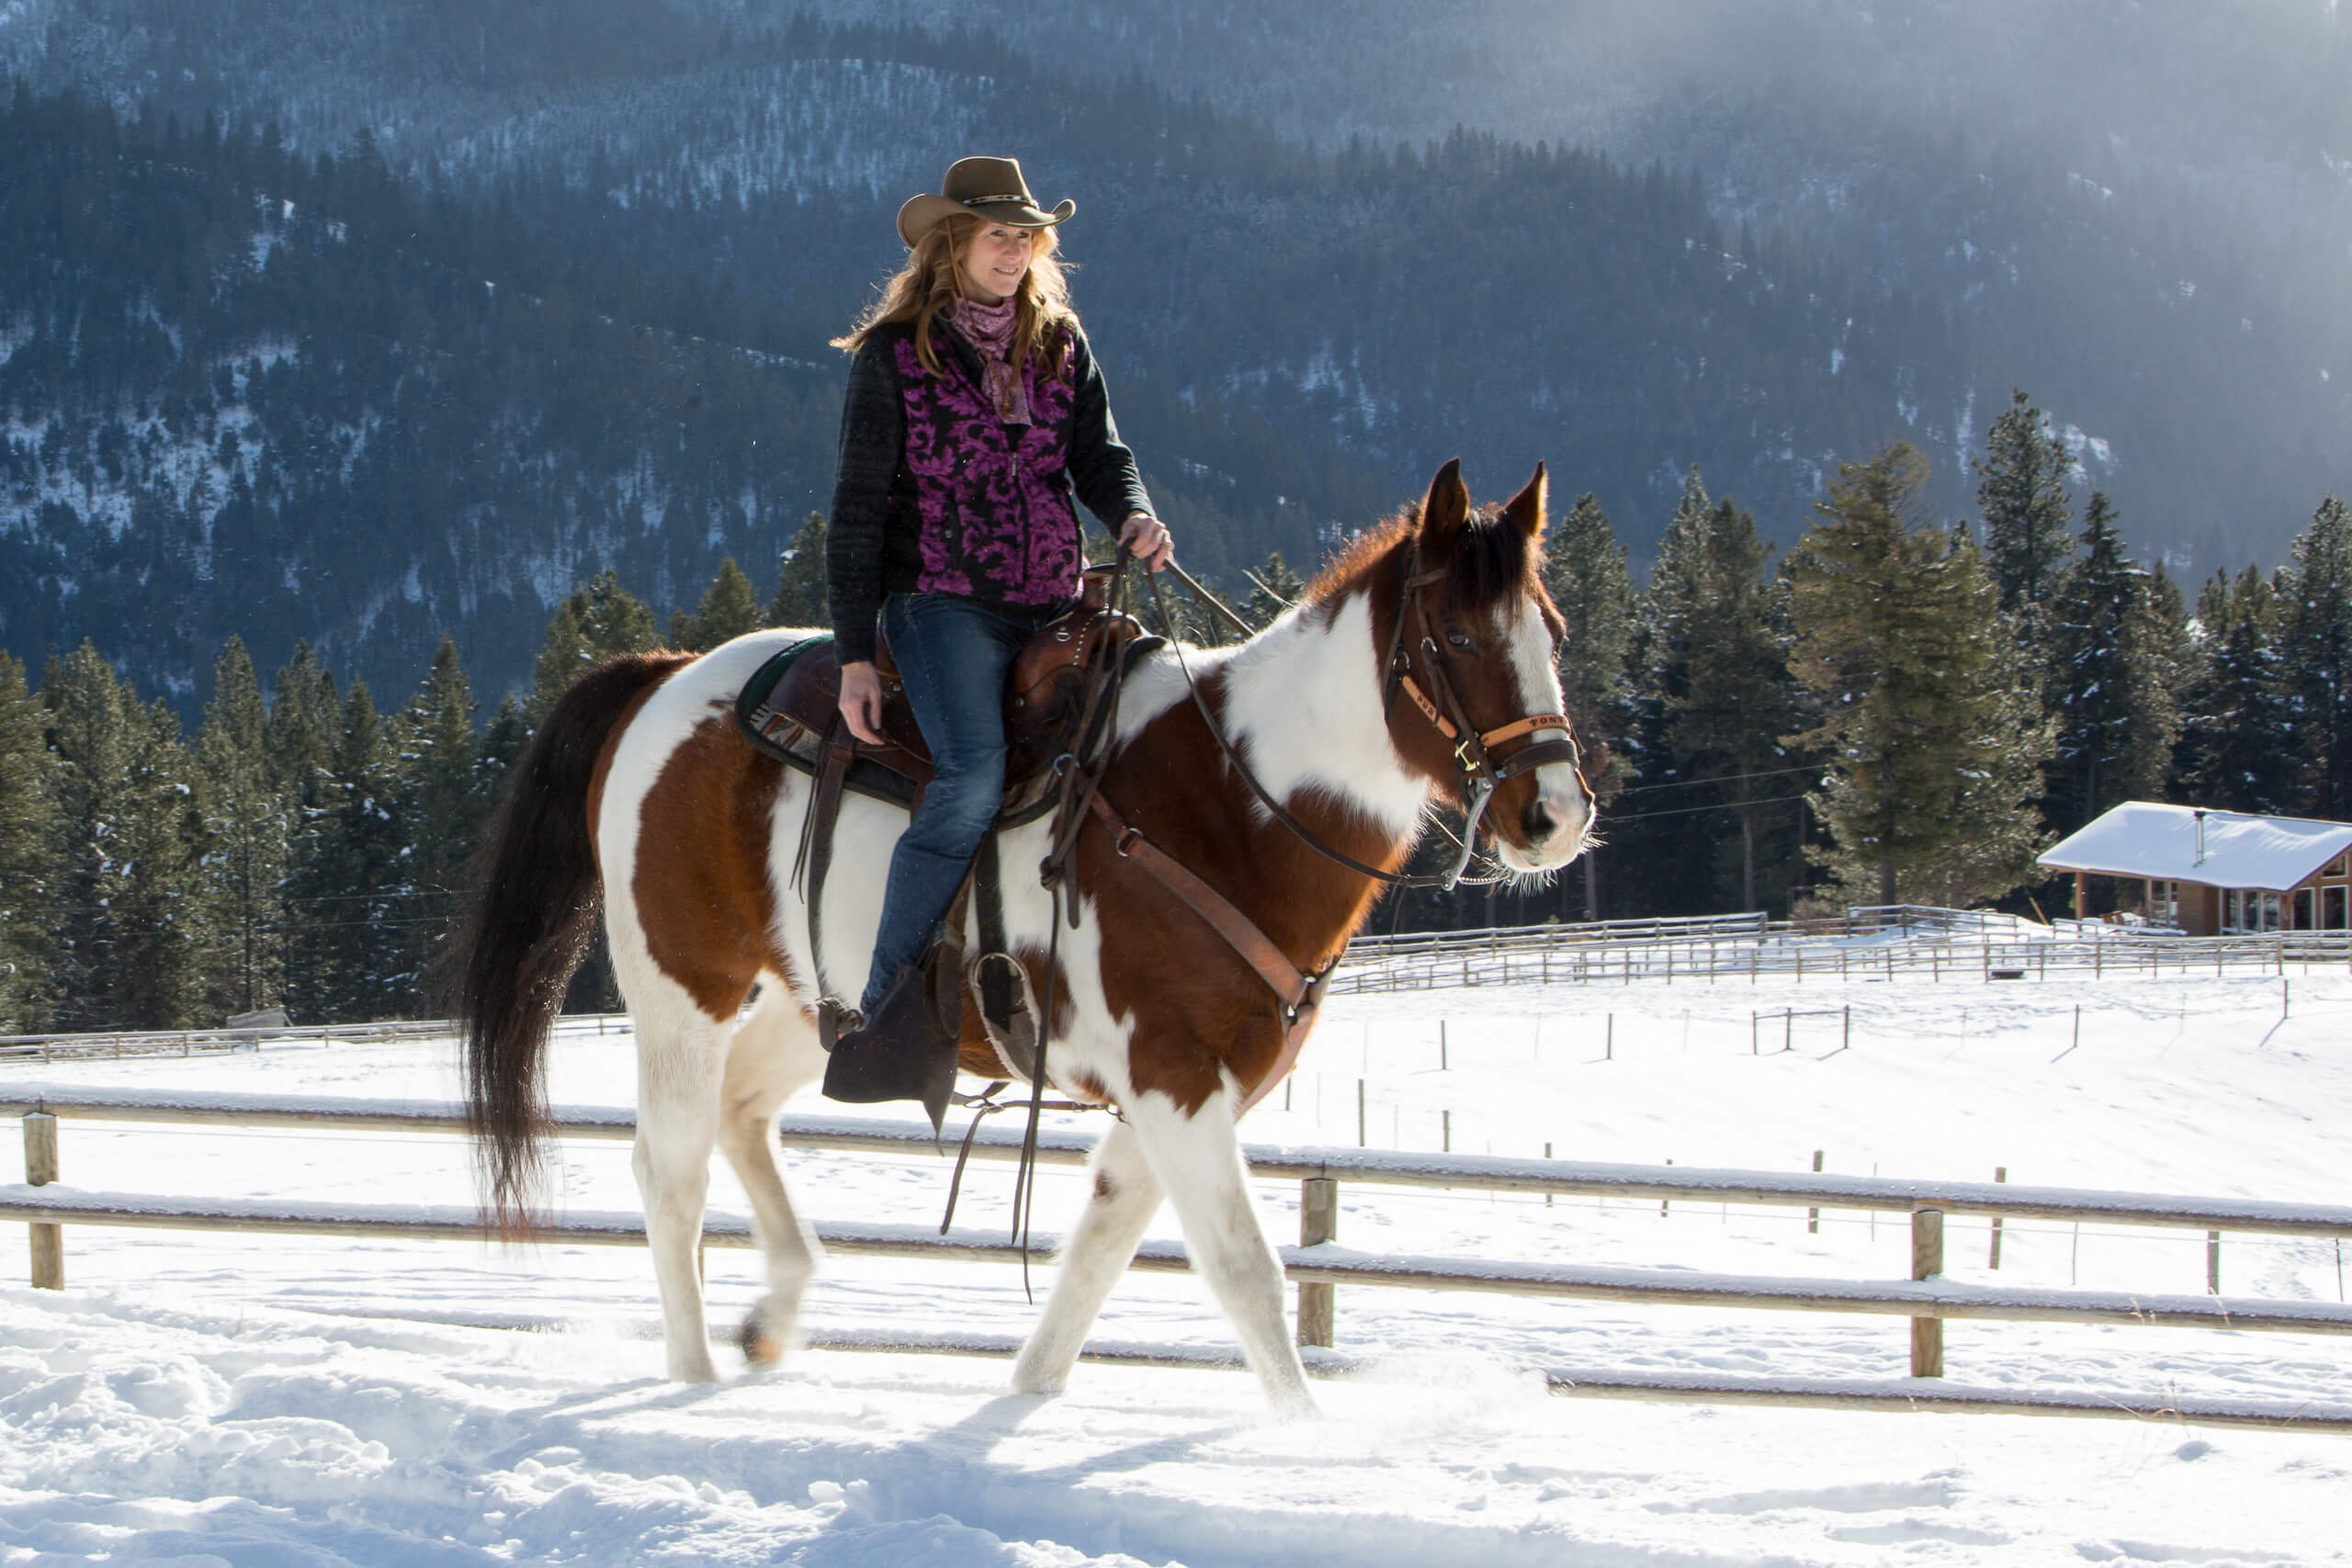 Horseback riding in the Snow